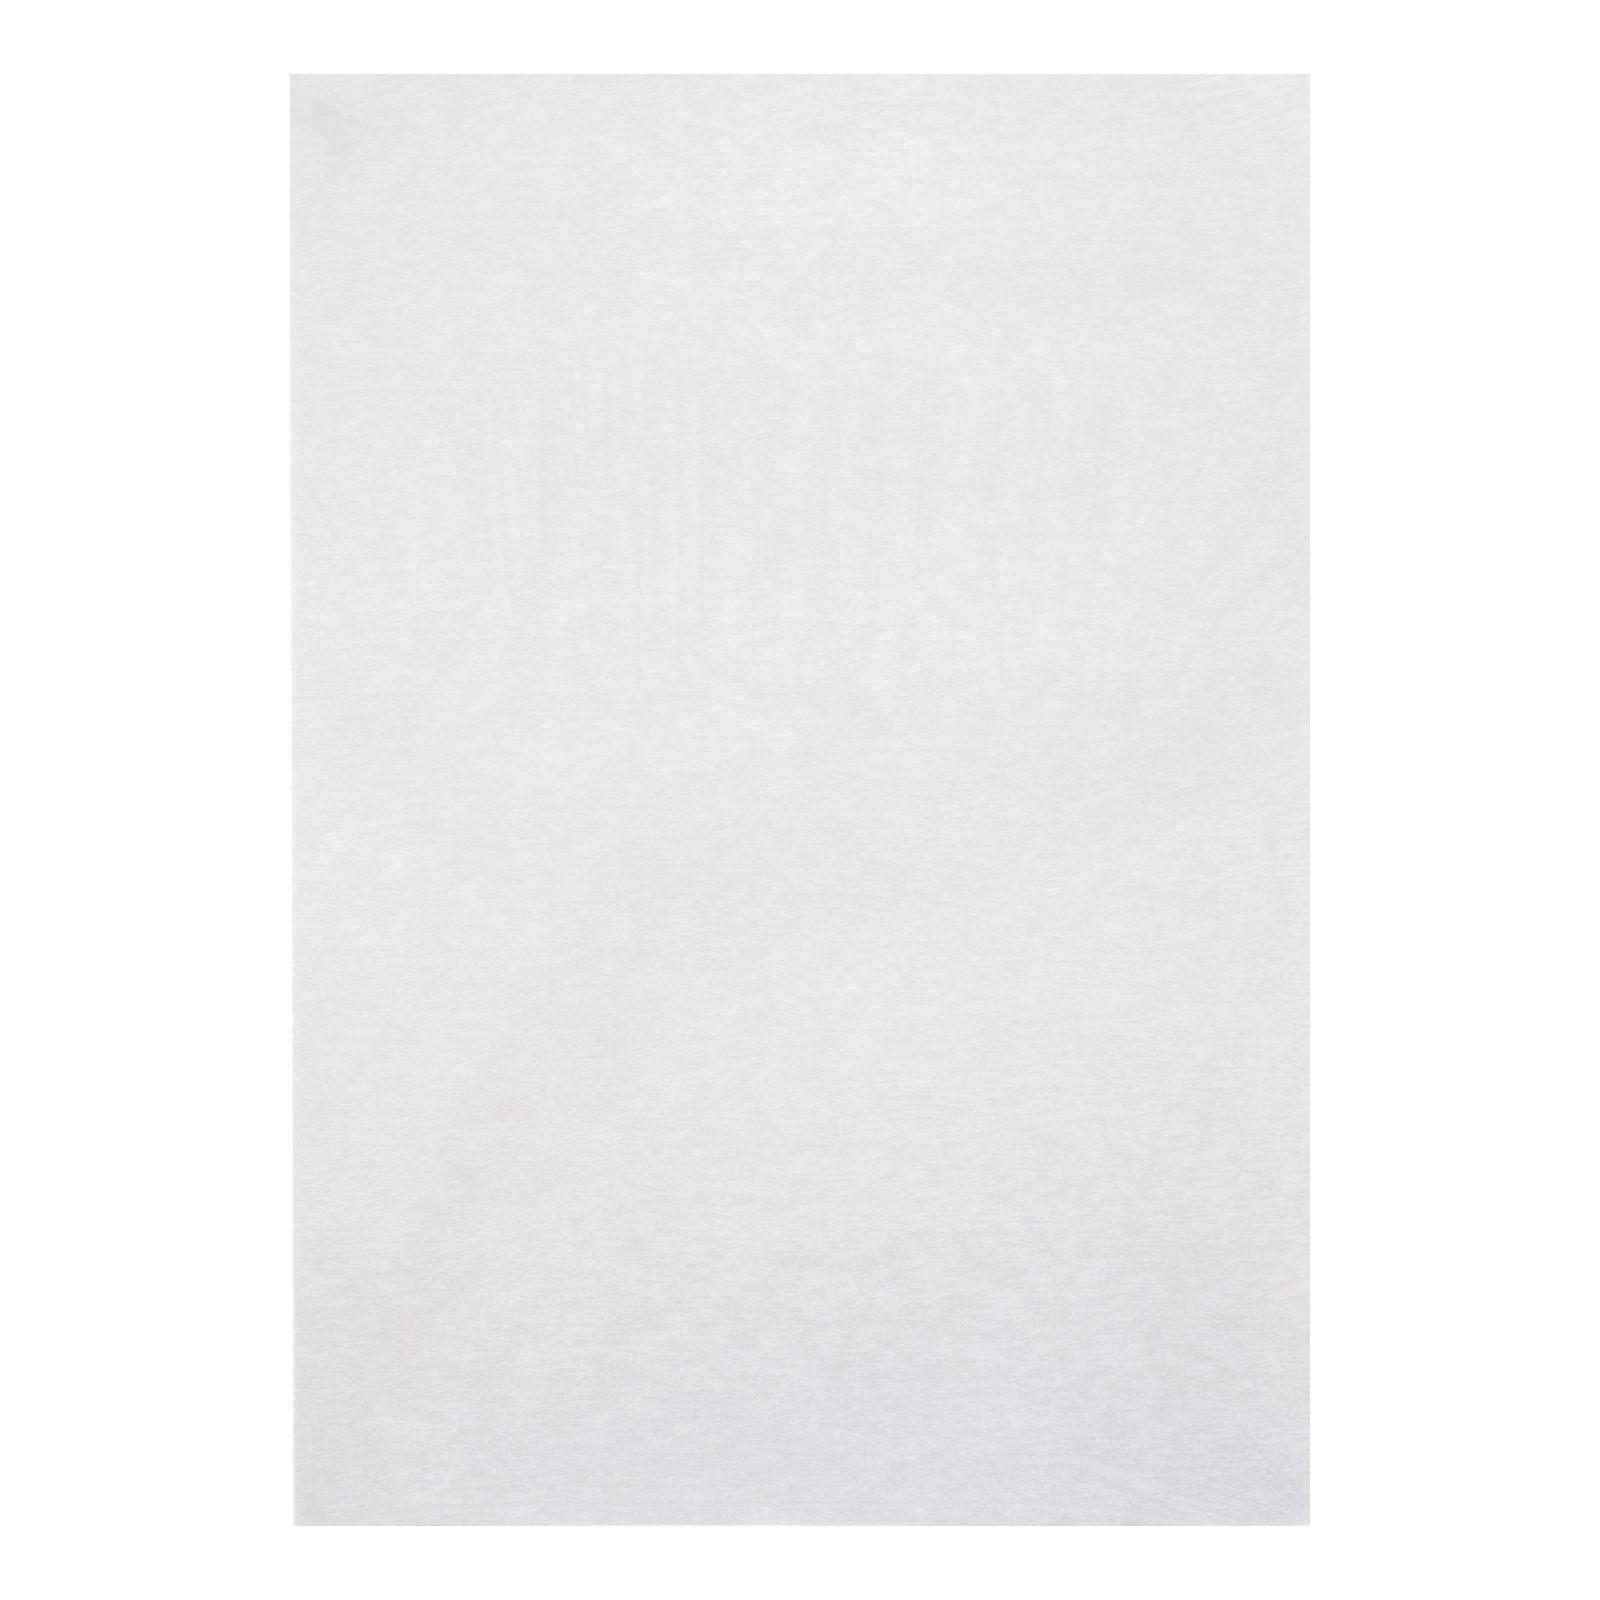 Картон Calligrata белый А4 24 листа односторонний мелованный 240 г/м2 - фото 3